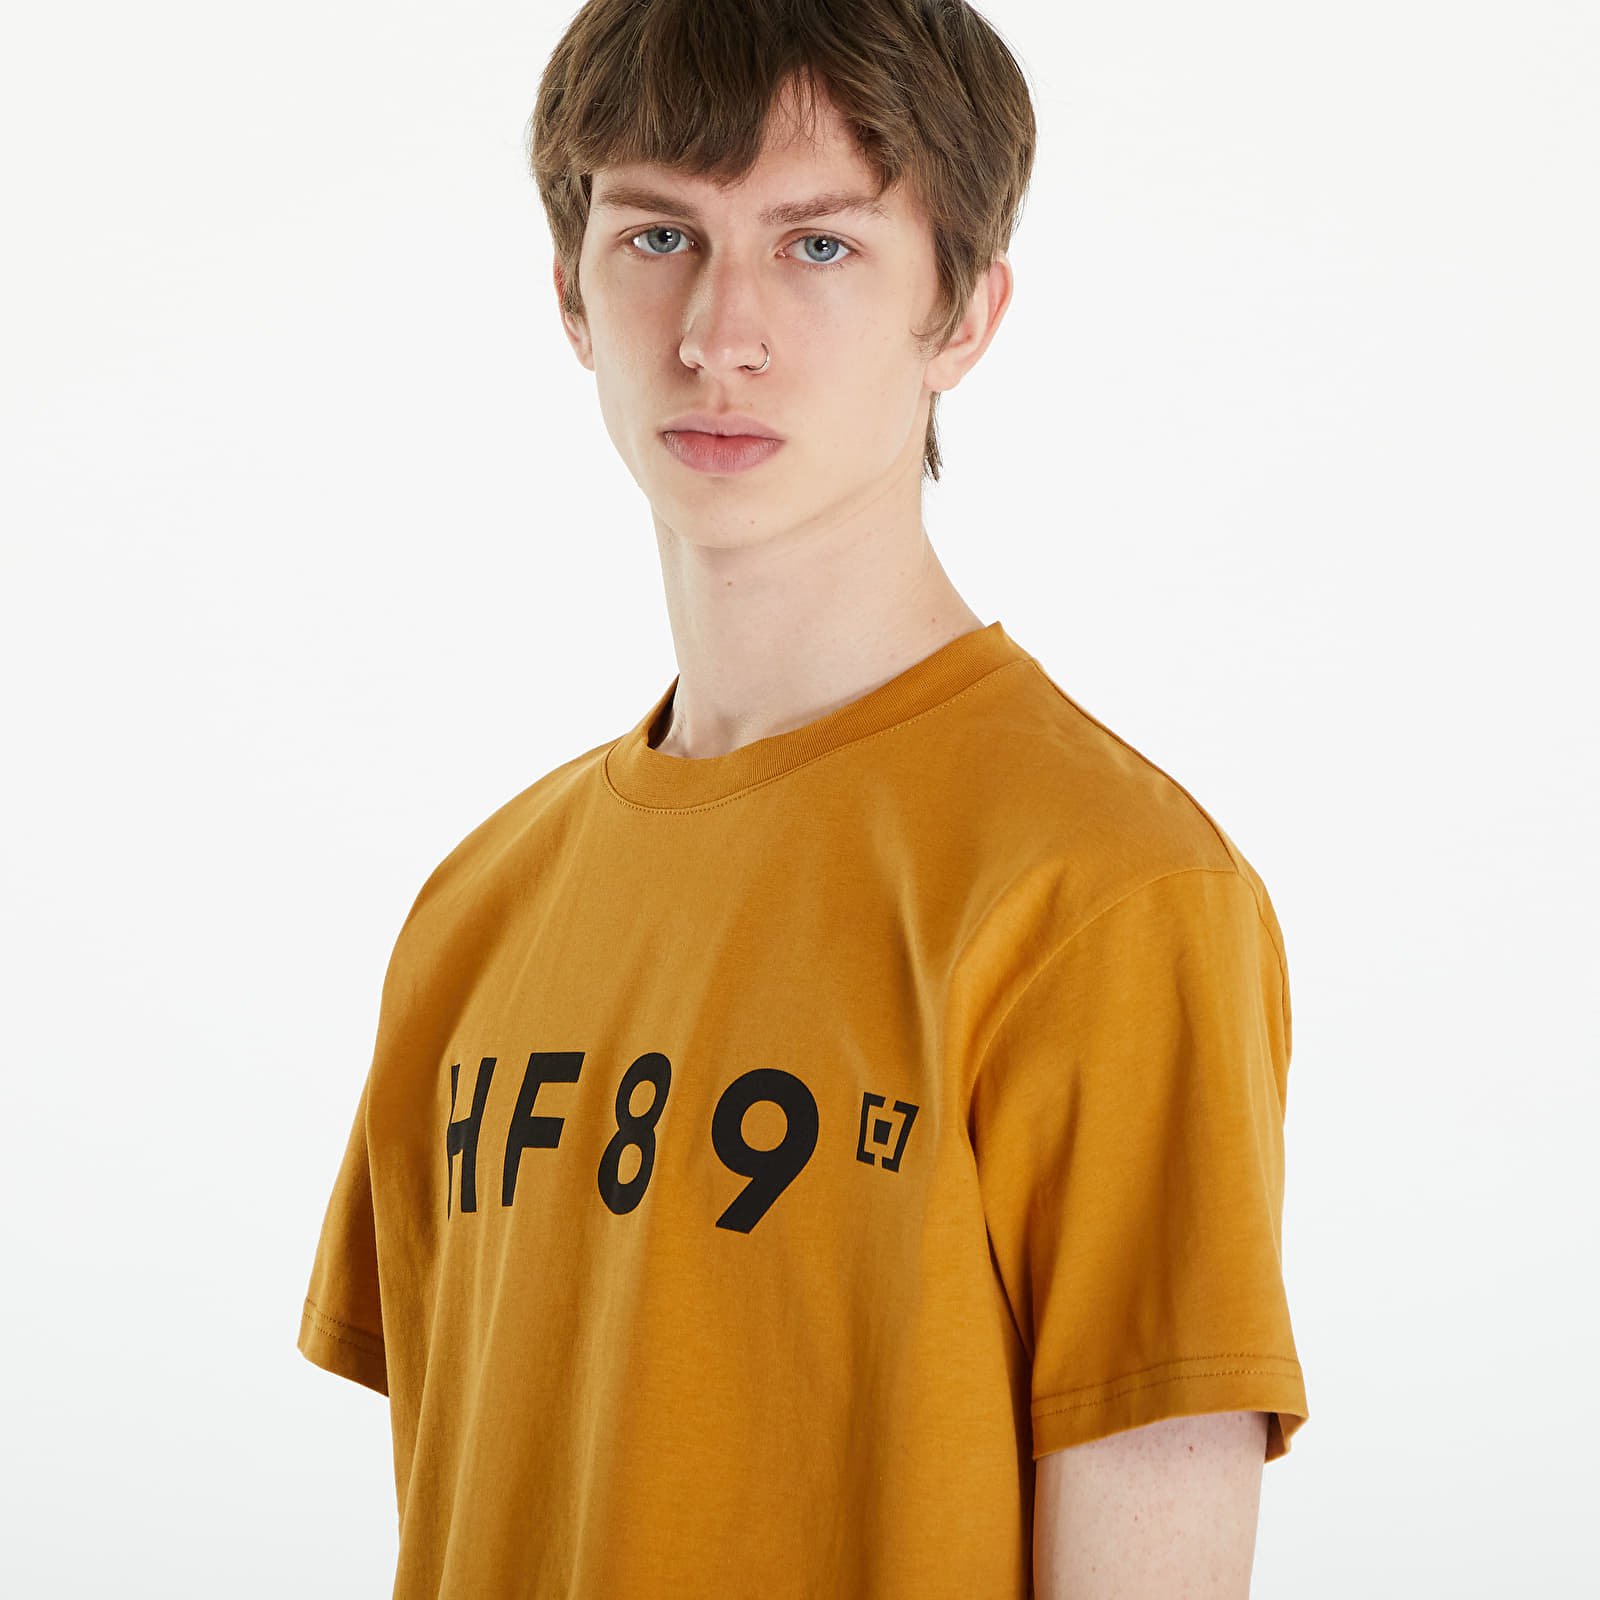 Hf89 T-Shirt Spruce Yellow